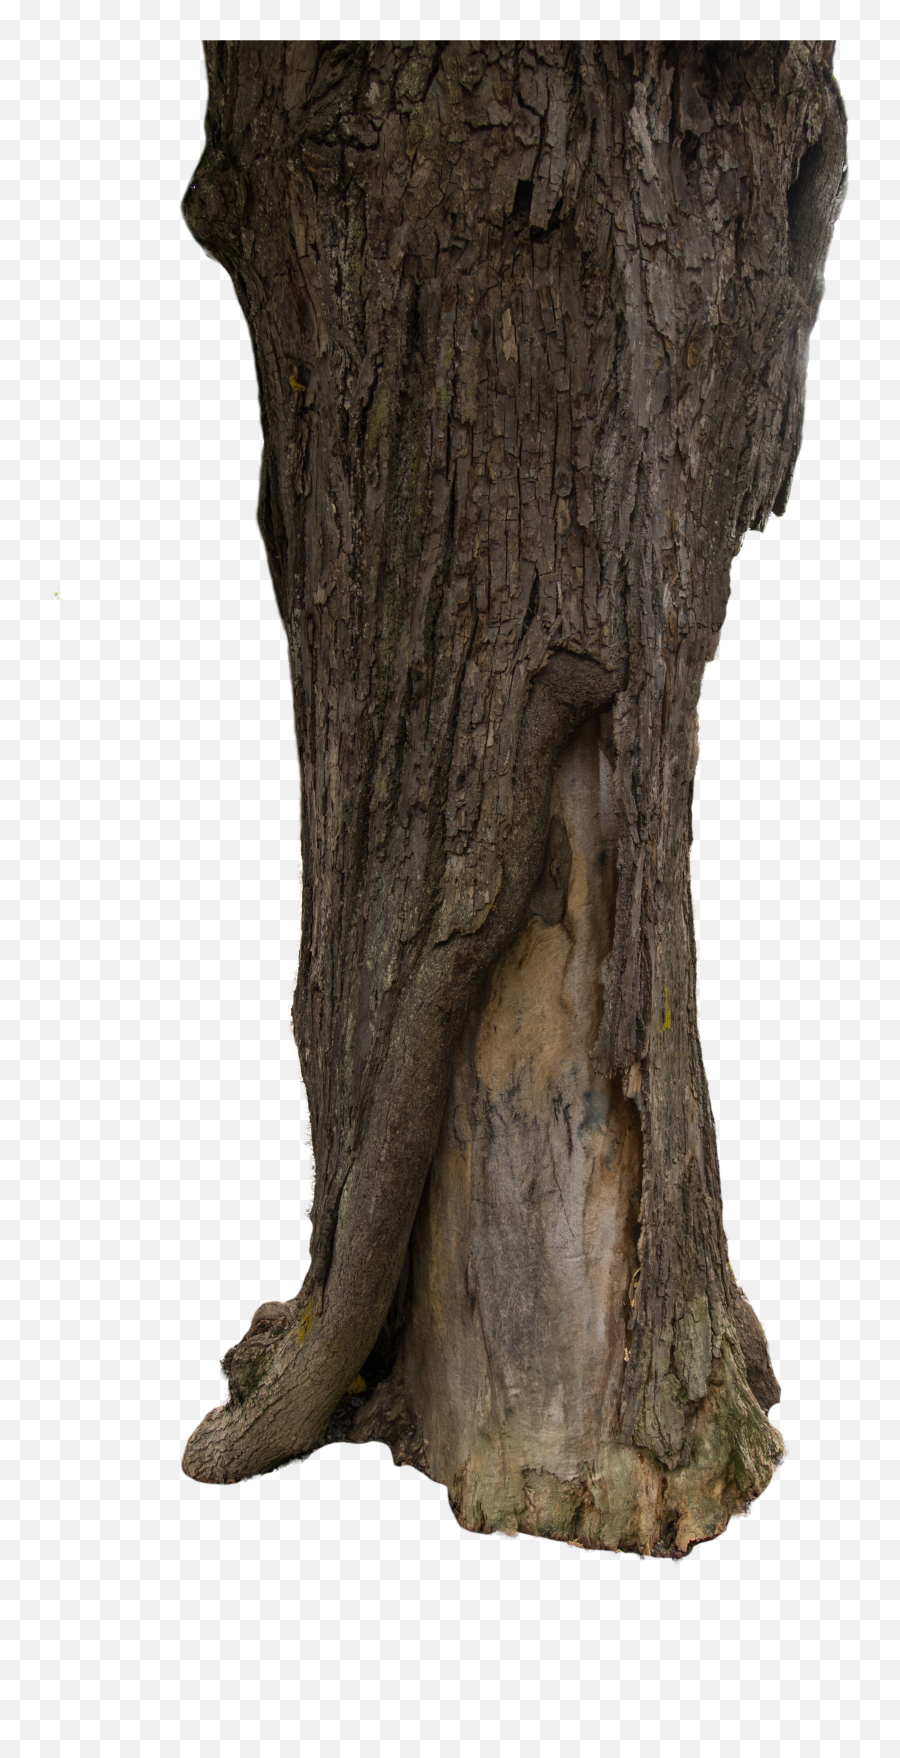 Download Tree Bark Texture Png